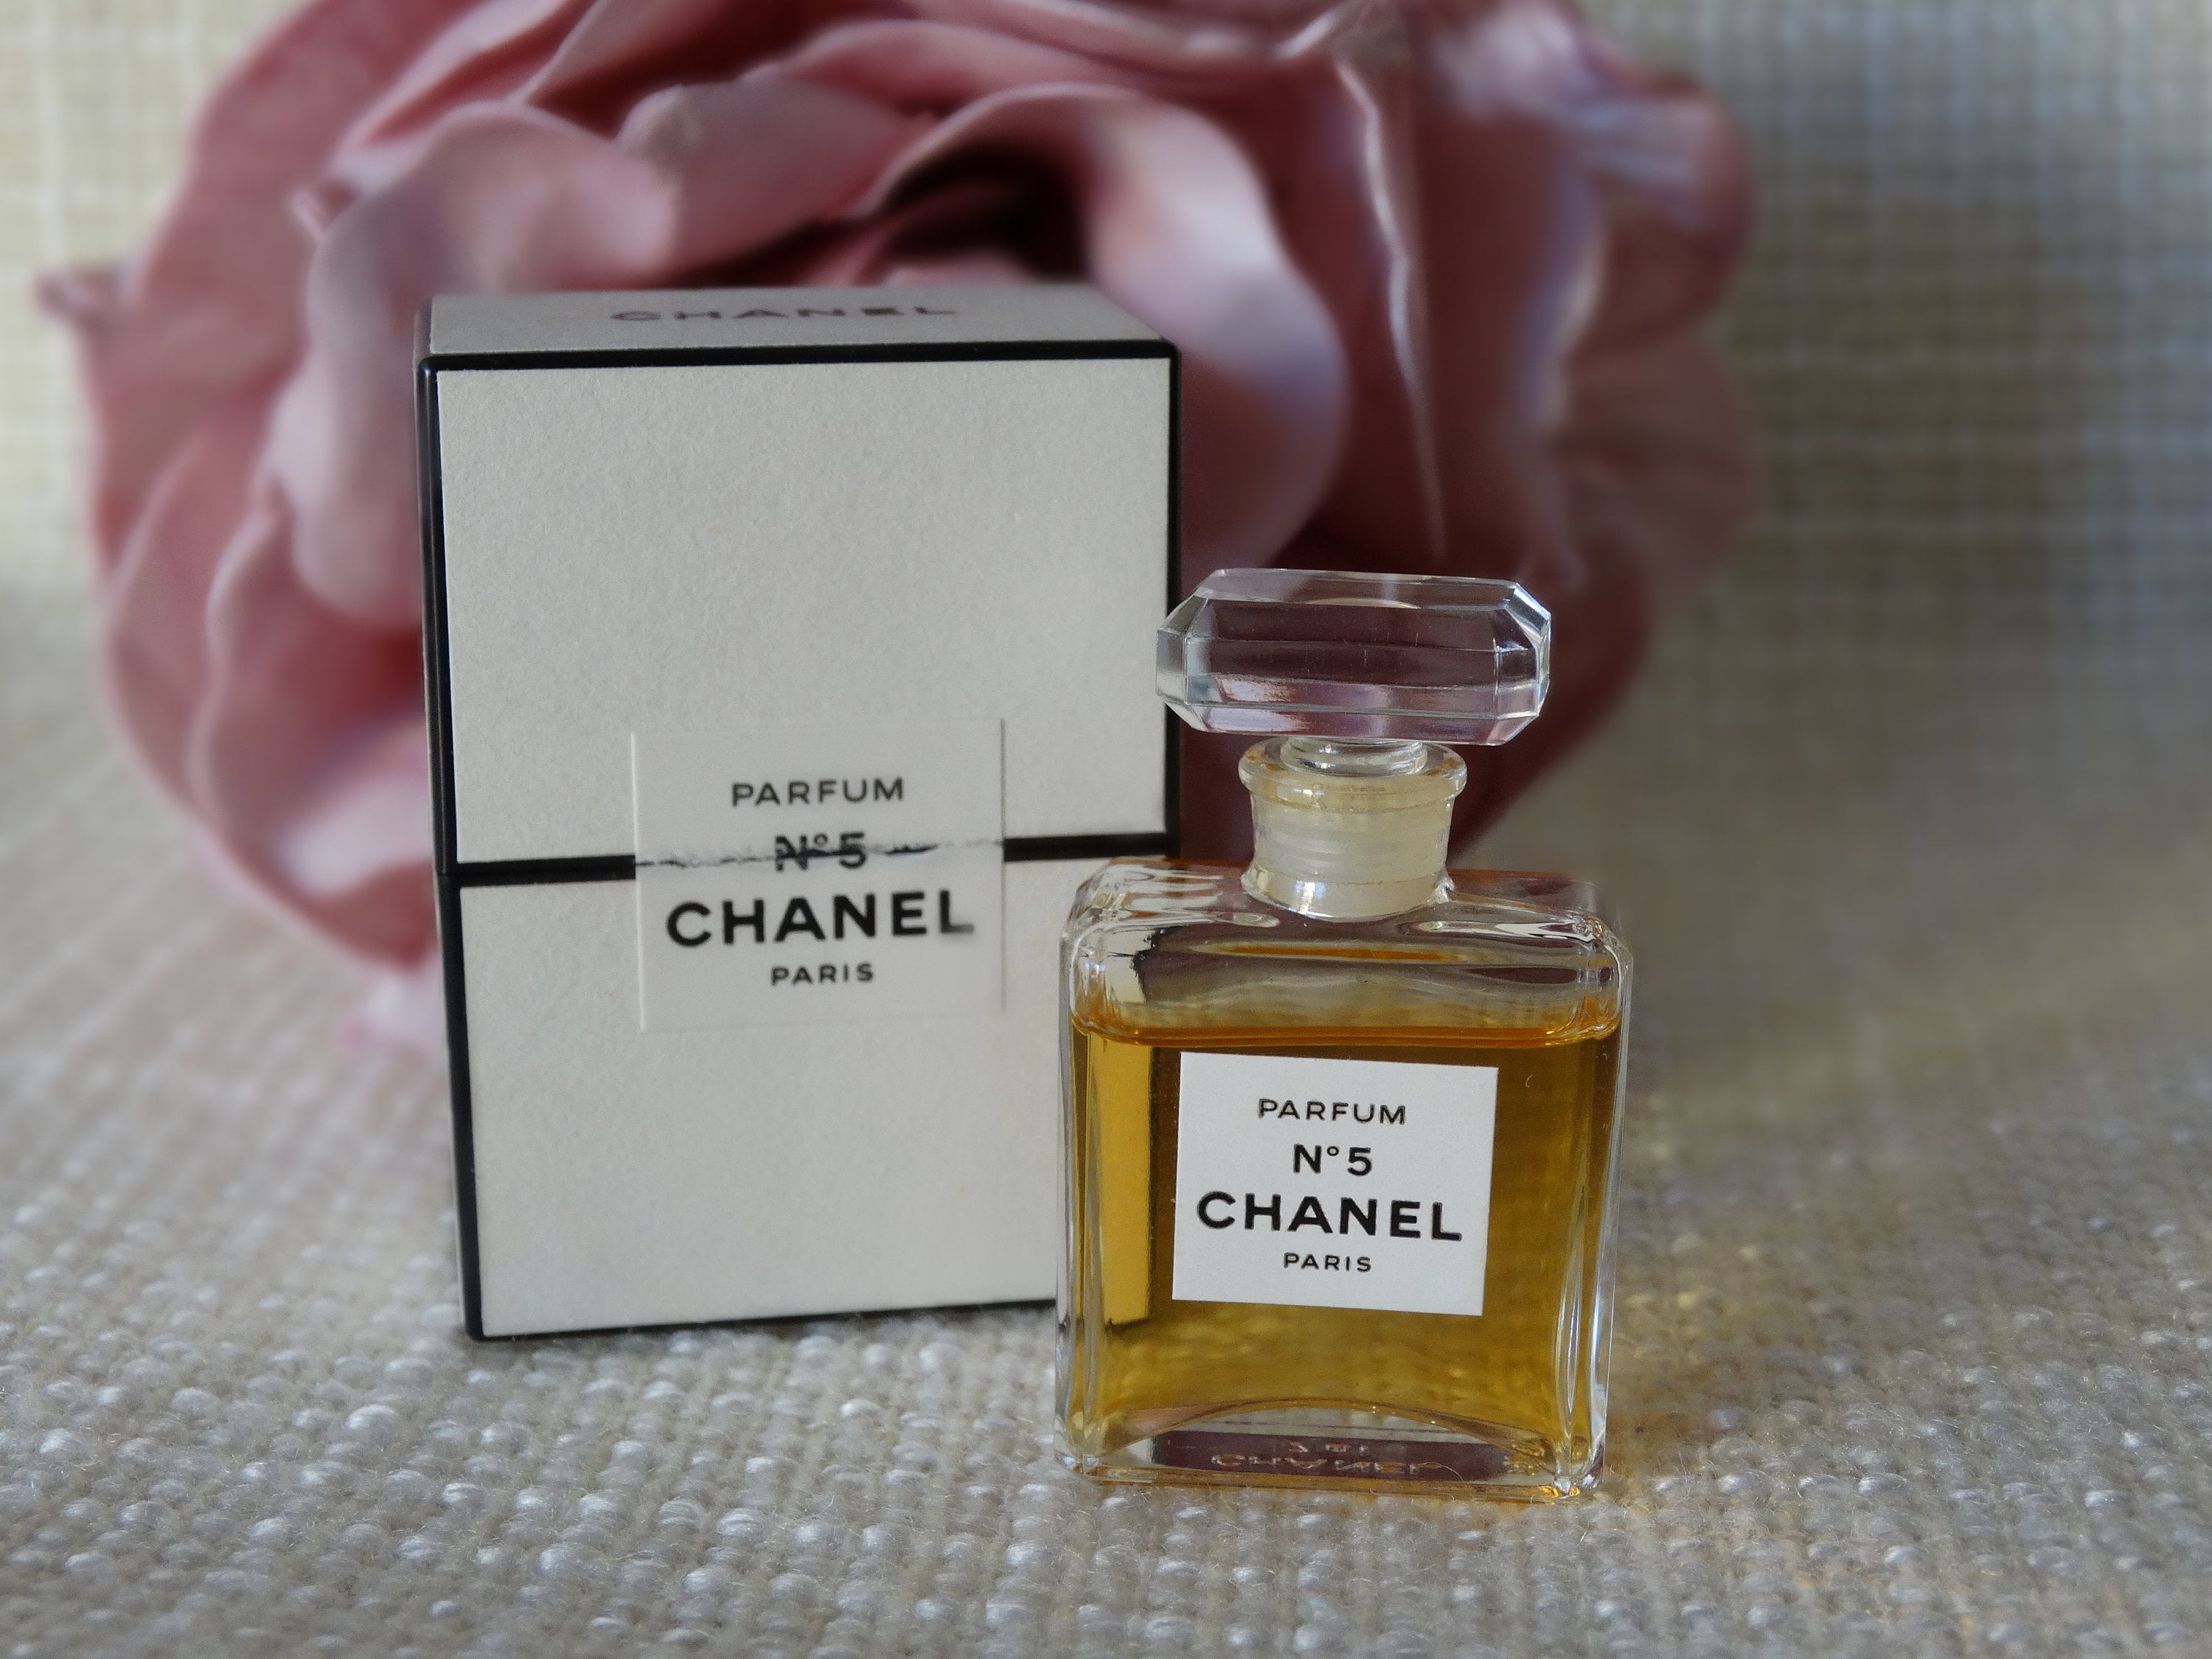 Chanel N 5 Chanel 1921 7 Ml 0.24 Fl.oz Pure Perfume 